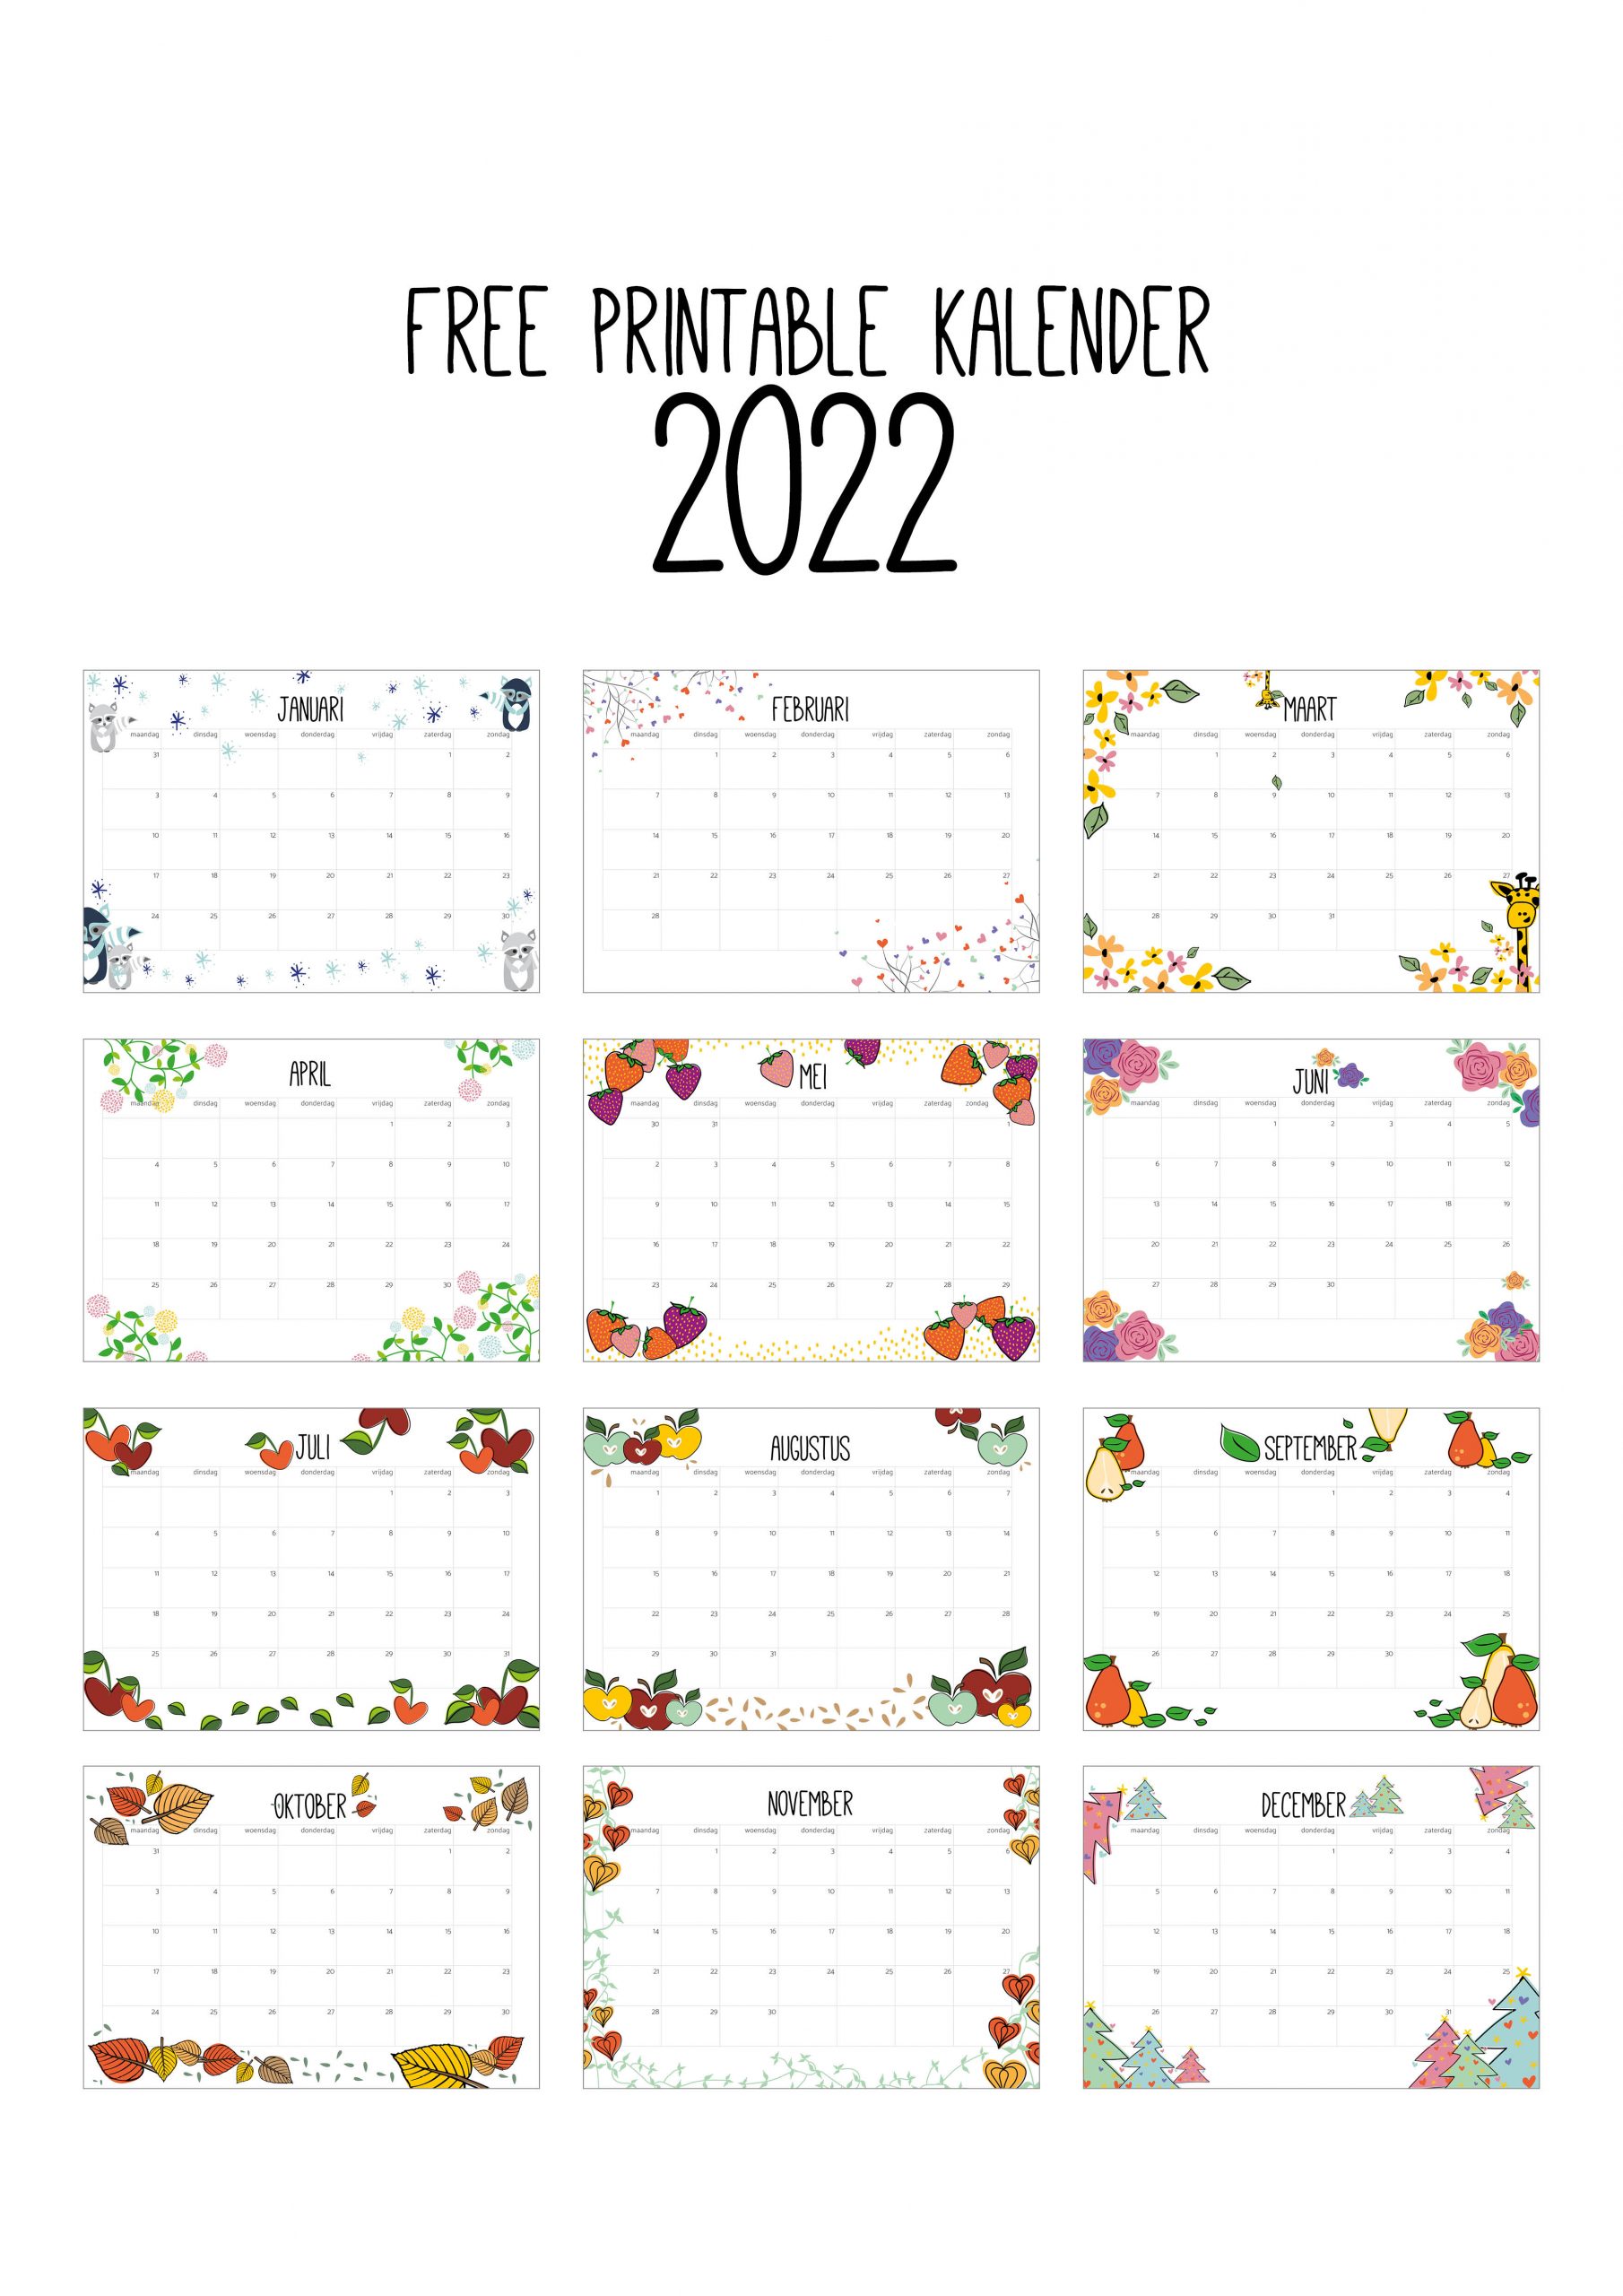 altijd Recyclen Onbemand Free Printable kalender 2022 - Hip & Hot - blogazine